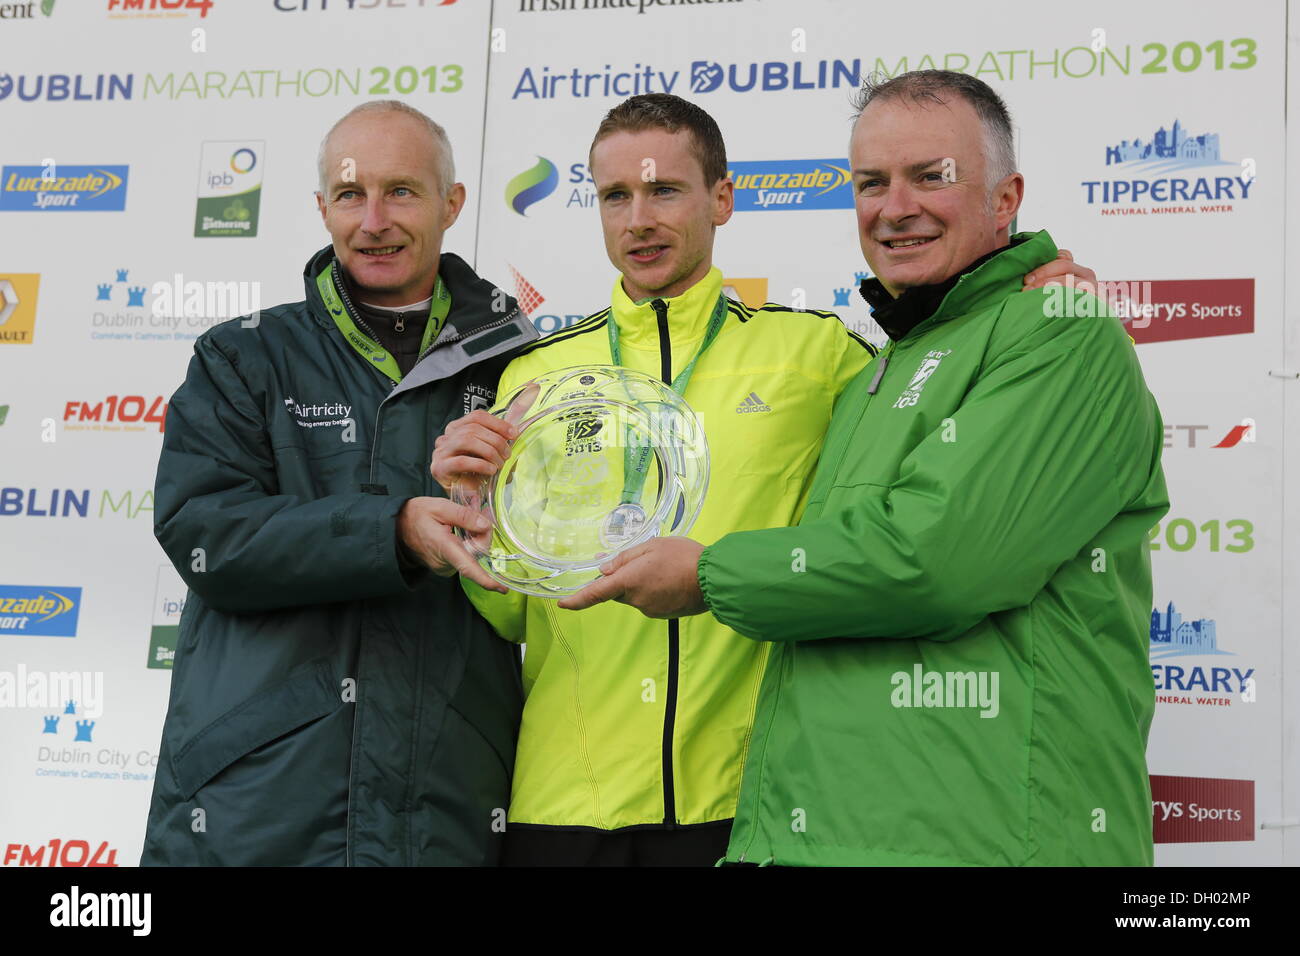 Dublín, Irlanda. 28 Oct 2013. Deslizadera irlandés Seán Hehir ganó la ...